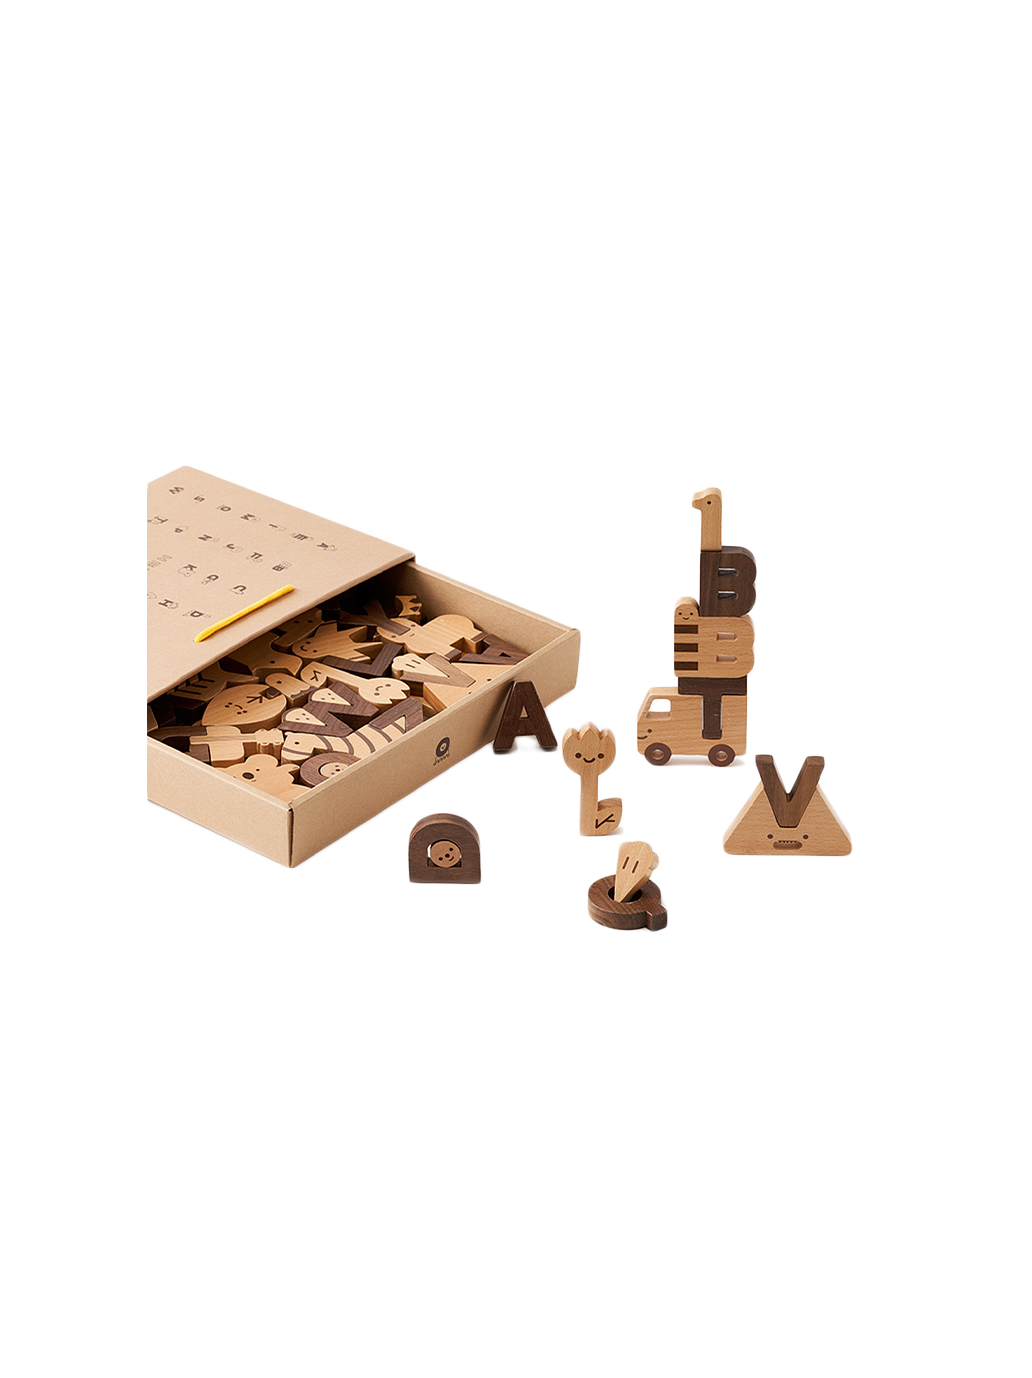 bloques de madera - rompecabezas del sistema del bloque del juego del alfabeto